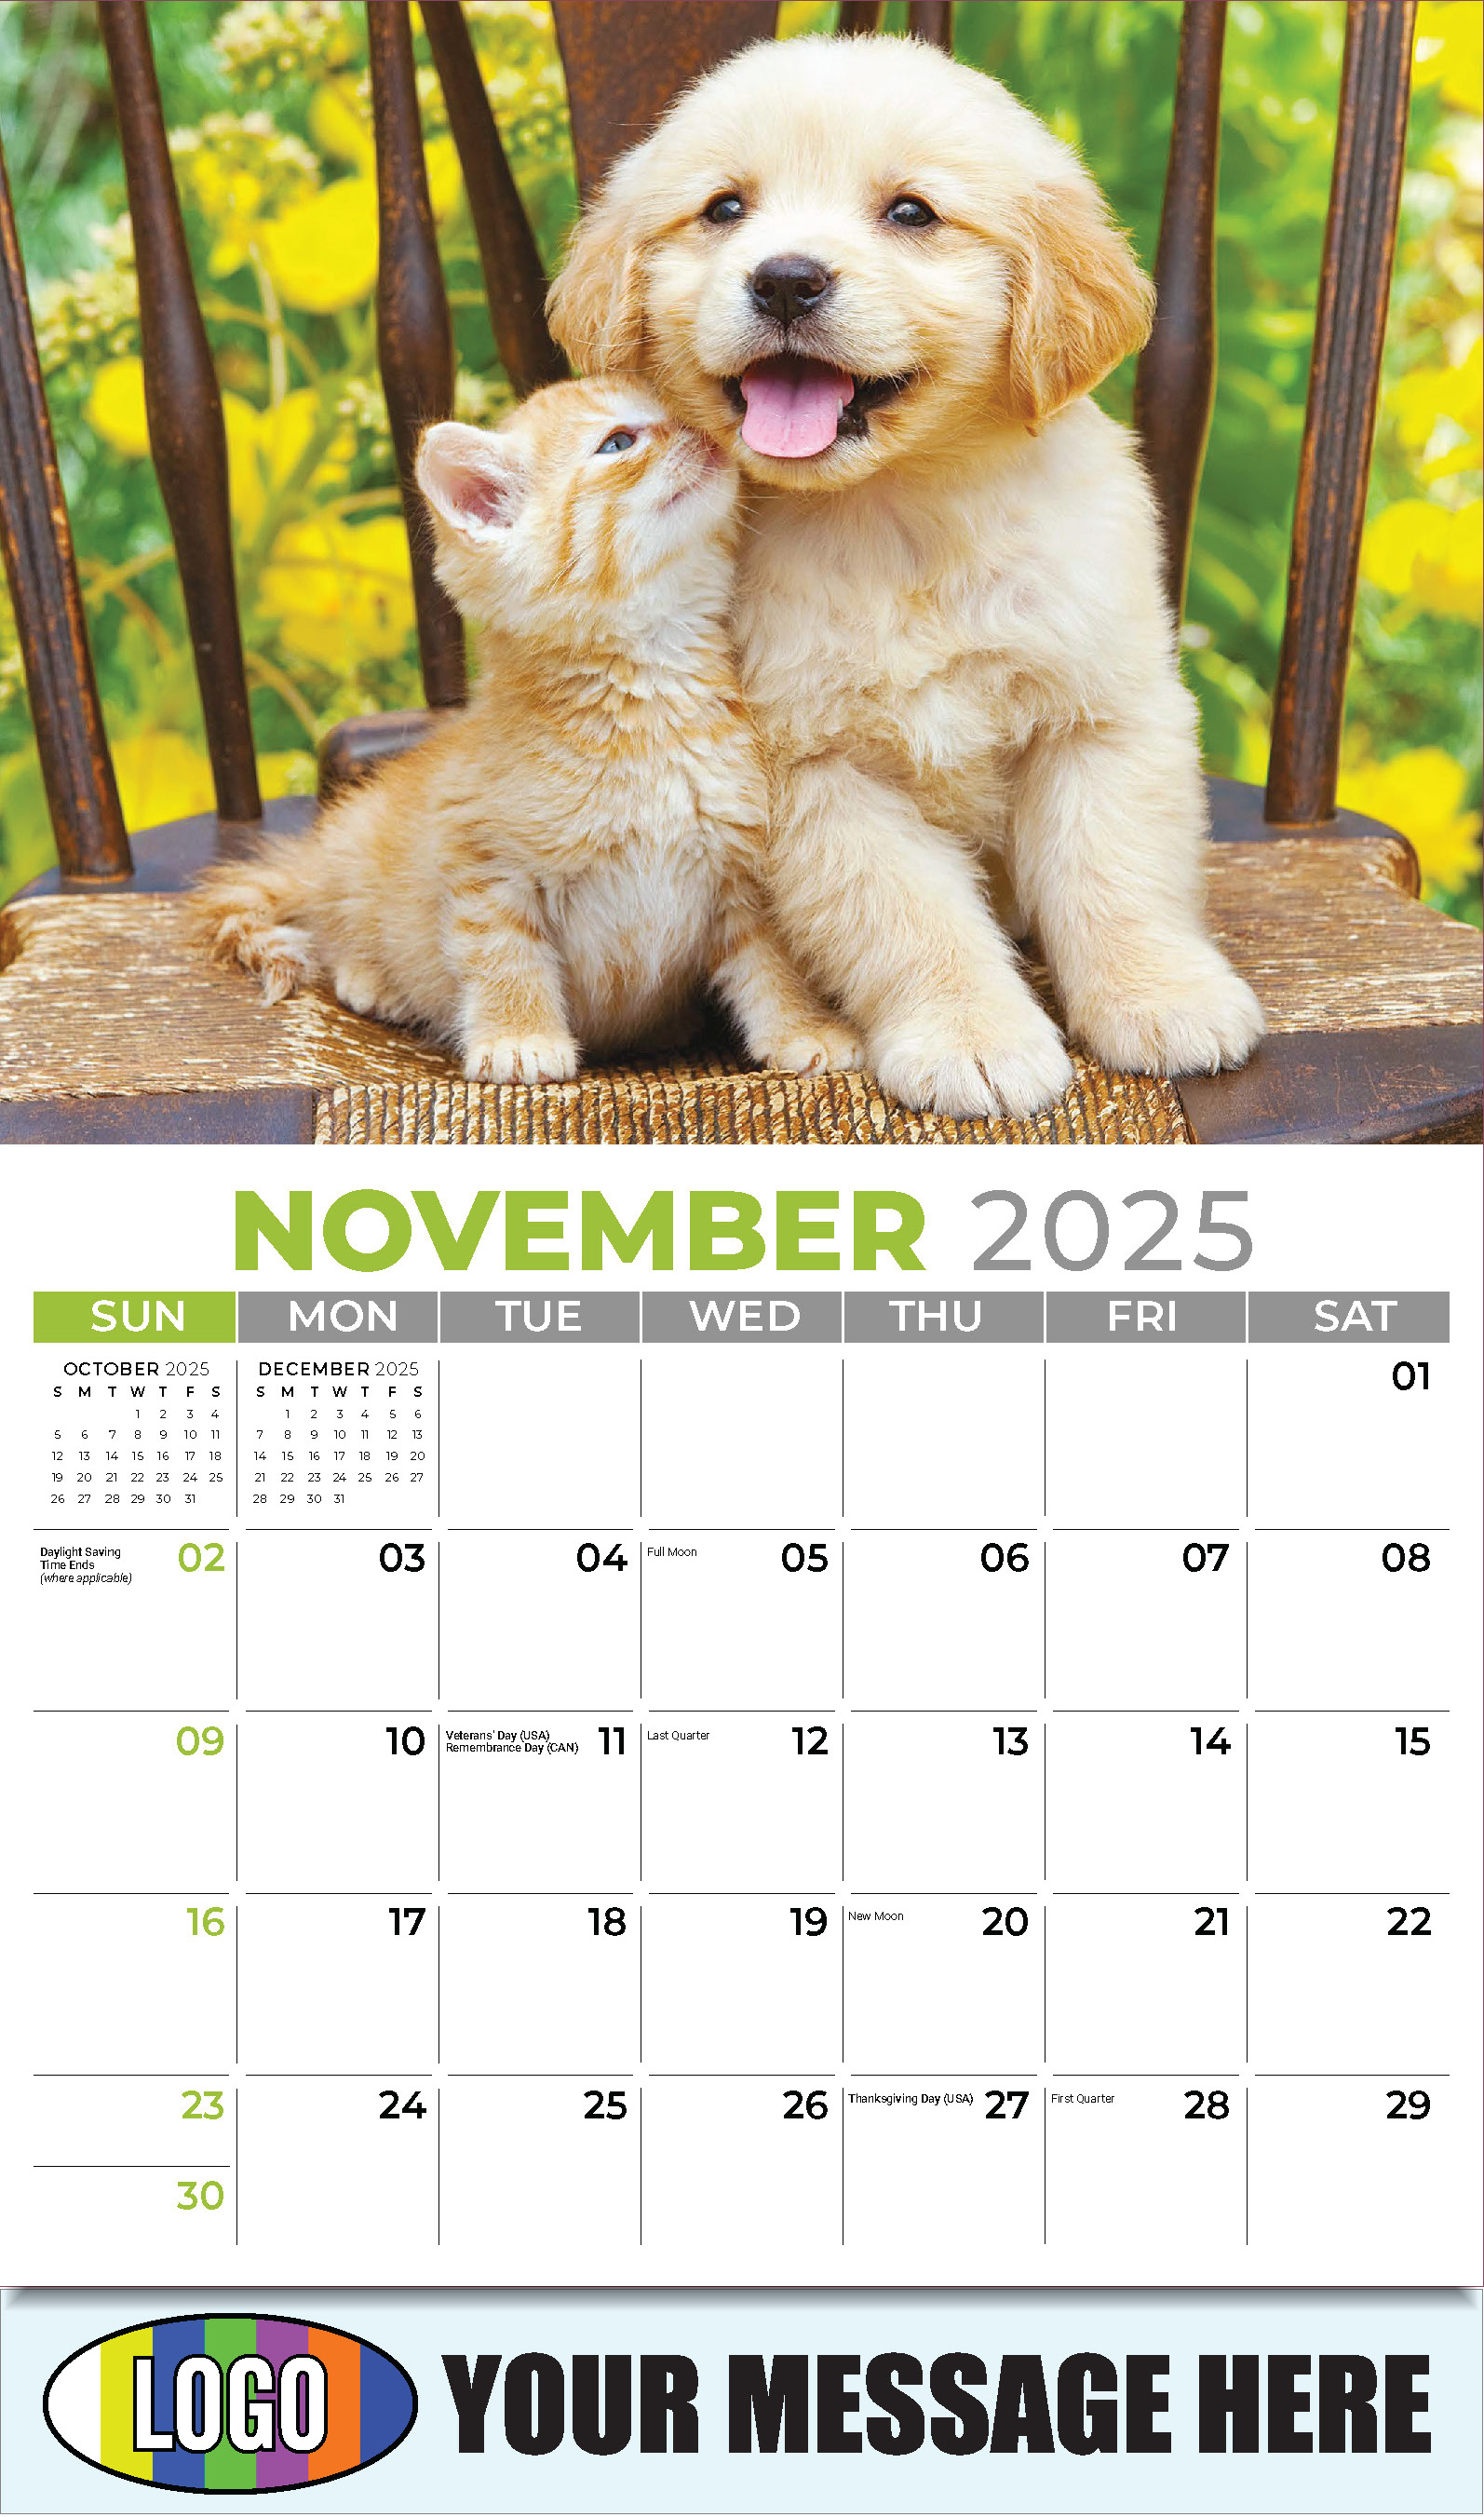 Pets 2025 Business Advertising Wall Calendar - November